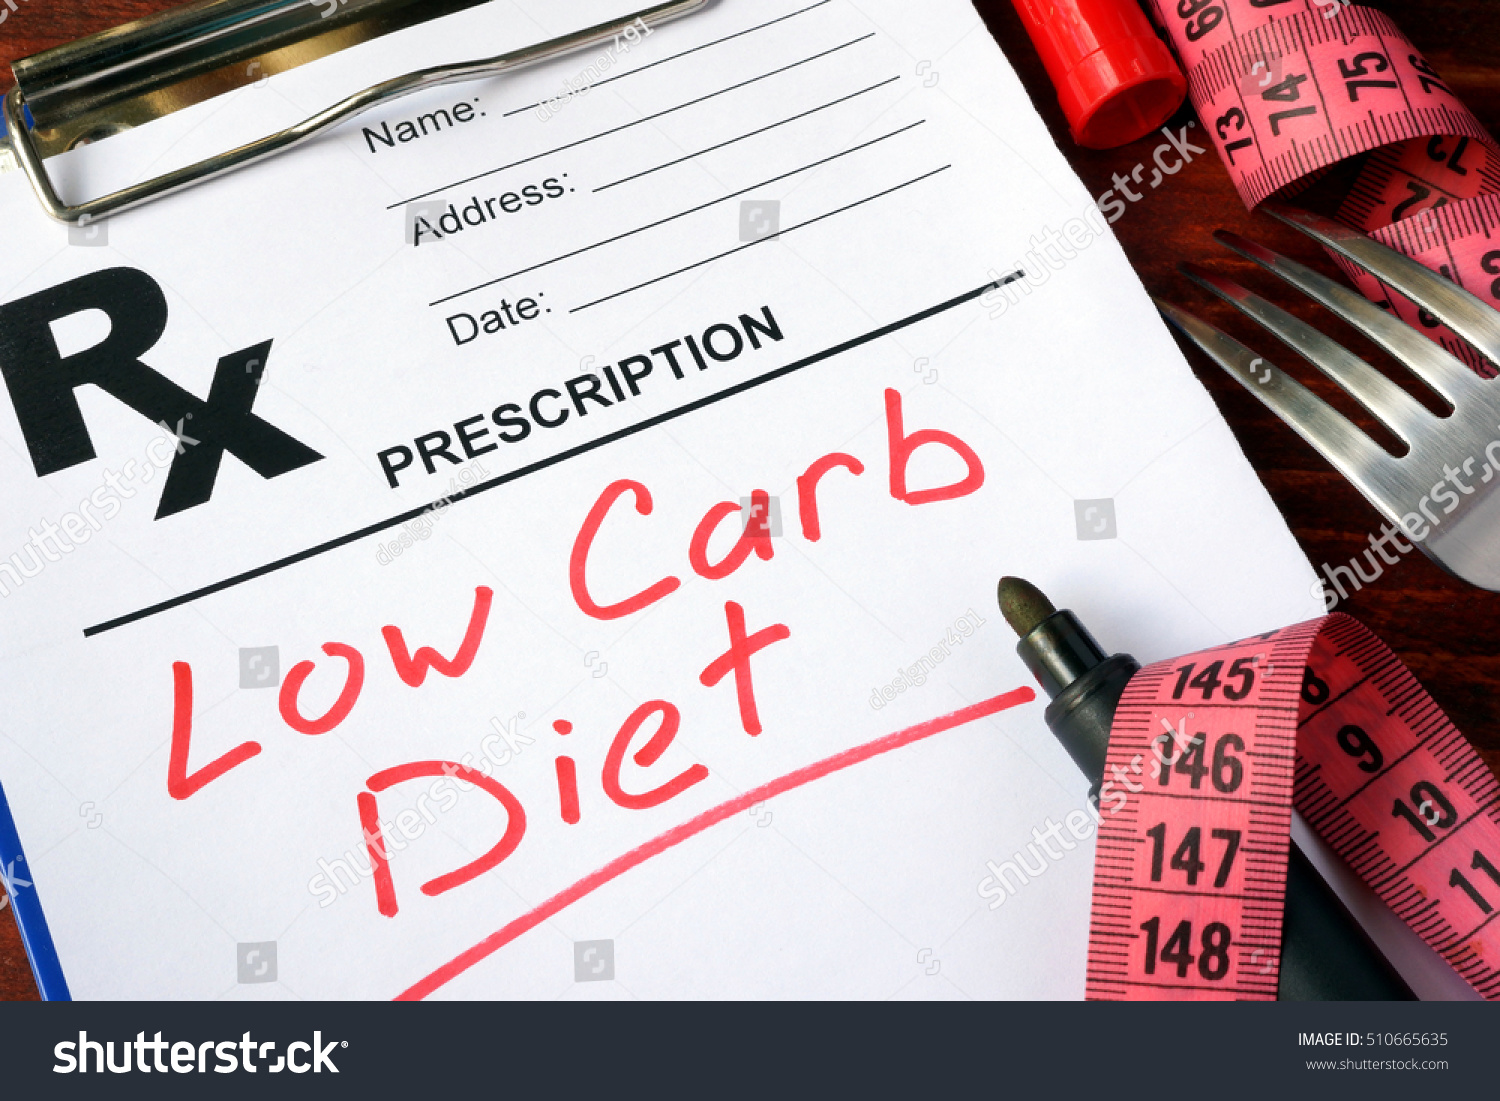 Prescription form with words low carb diet. #510665635